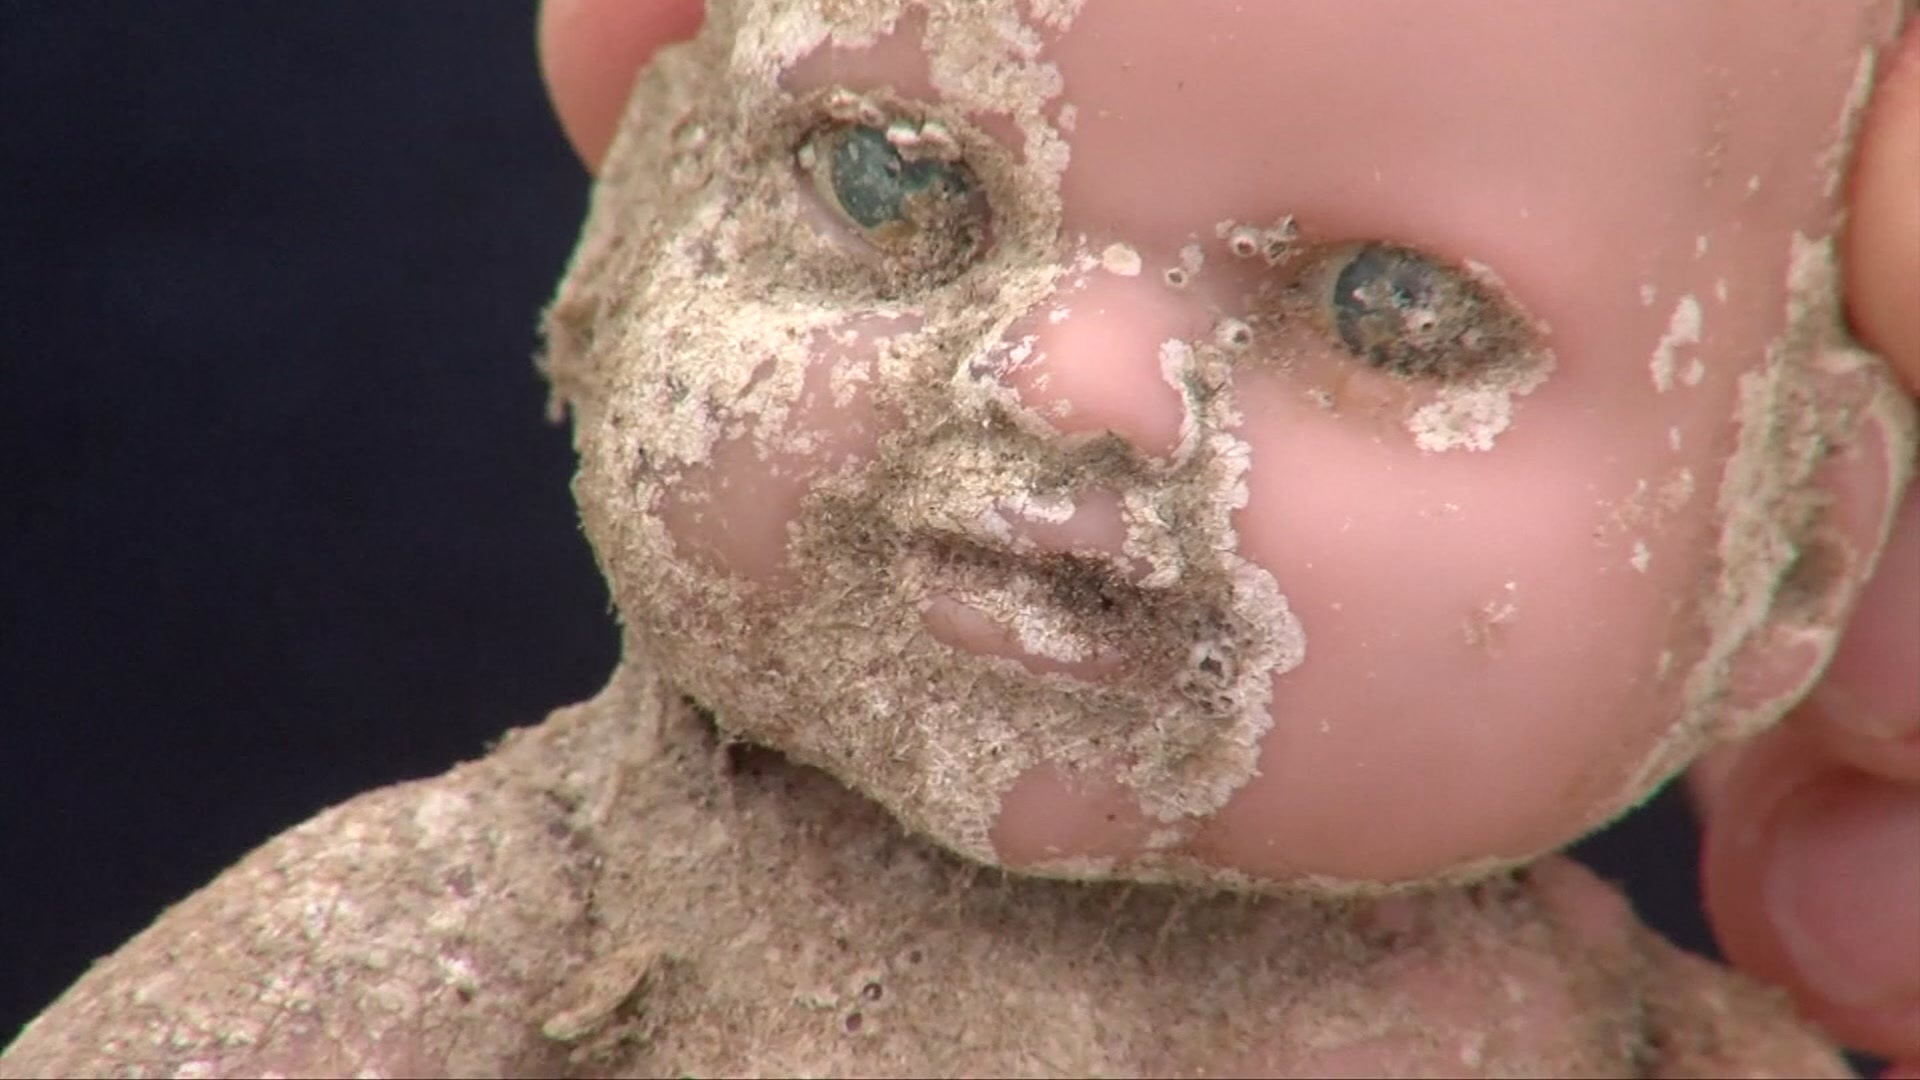 Creepy Dolls Keep Washing Up on Texas Beaches – NBC 5 Dallas-Fort